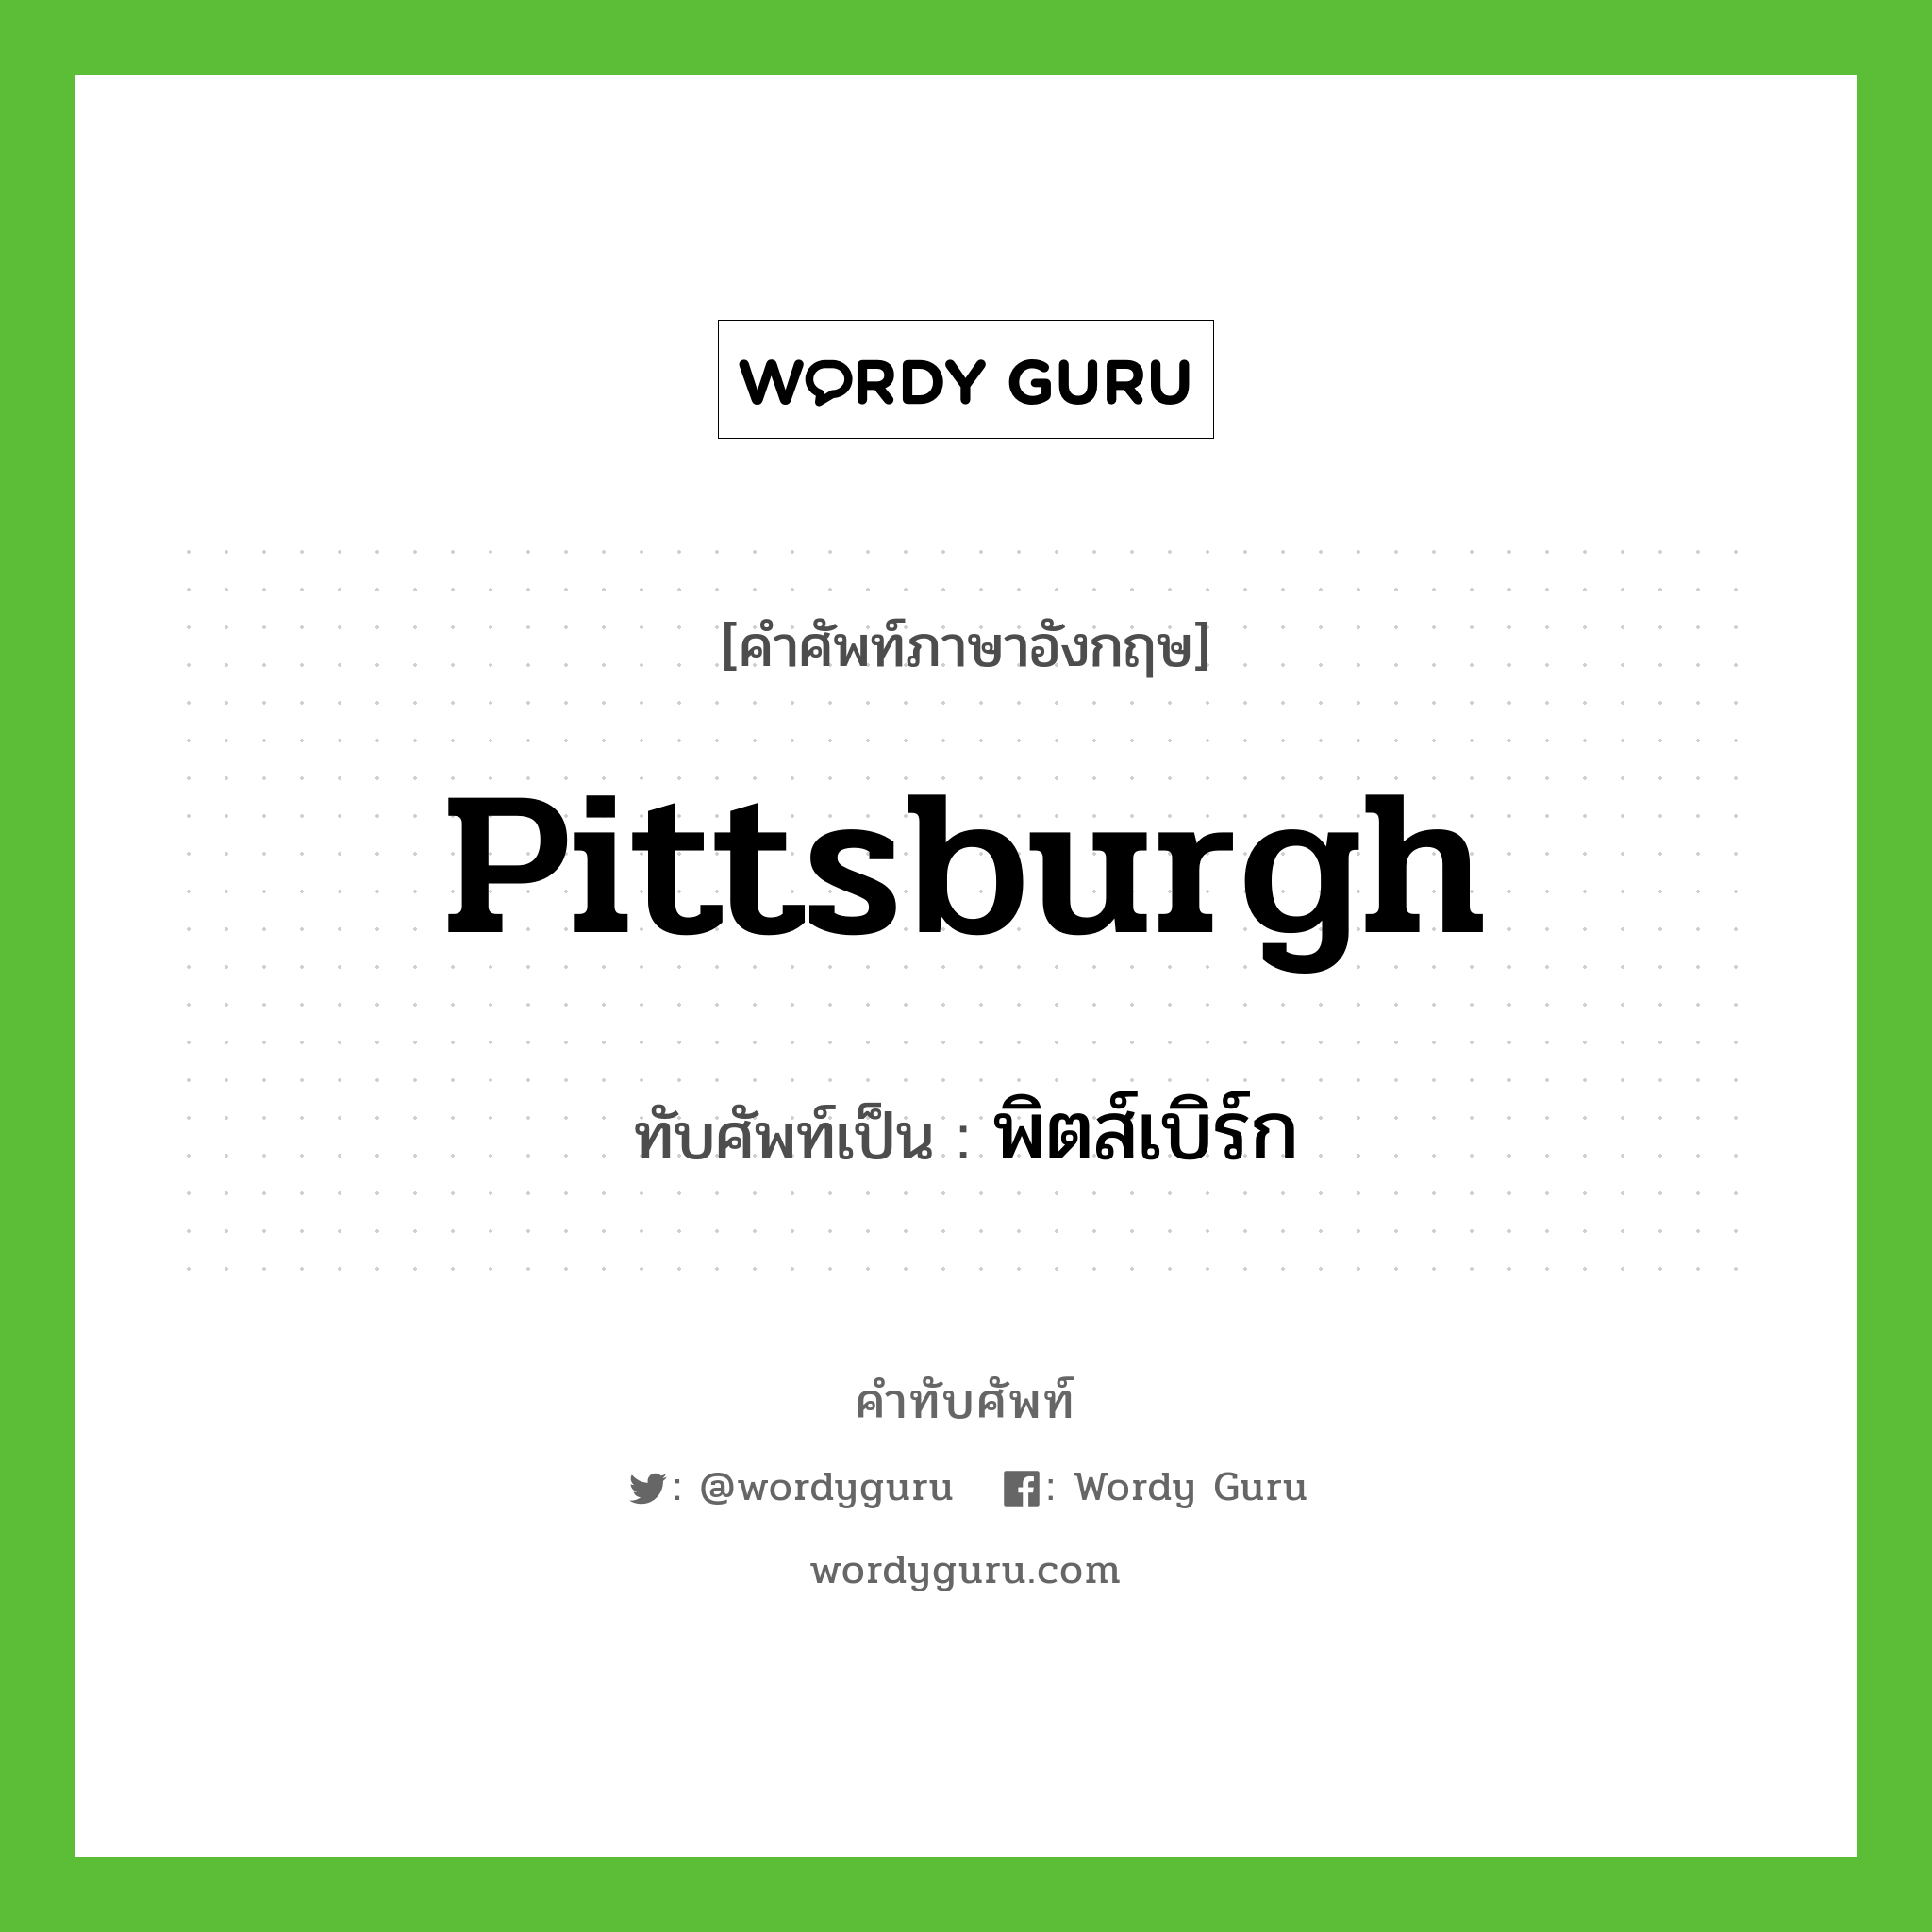 Pittsburgh เขียนเป็นคำไทยว่าอะไร?, คำศัพท์ภาษาอังกฤษ Pittsburgh ทับศัพท์เป็น พิตส์เบิร์ก